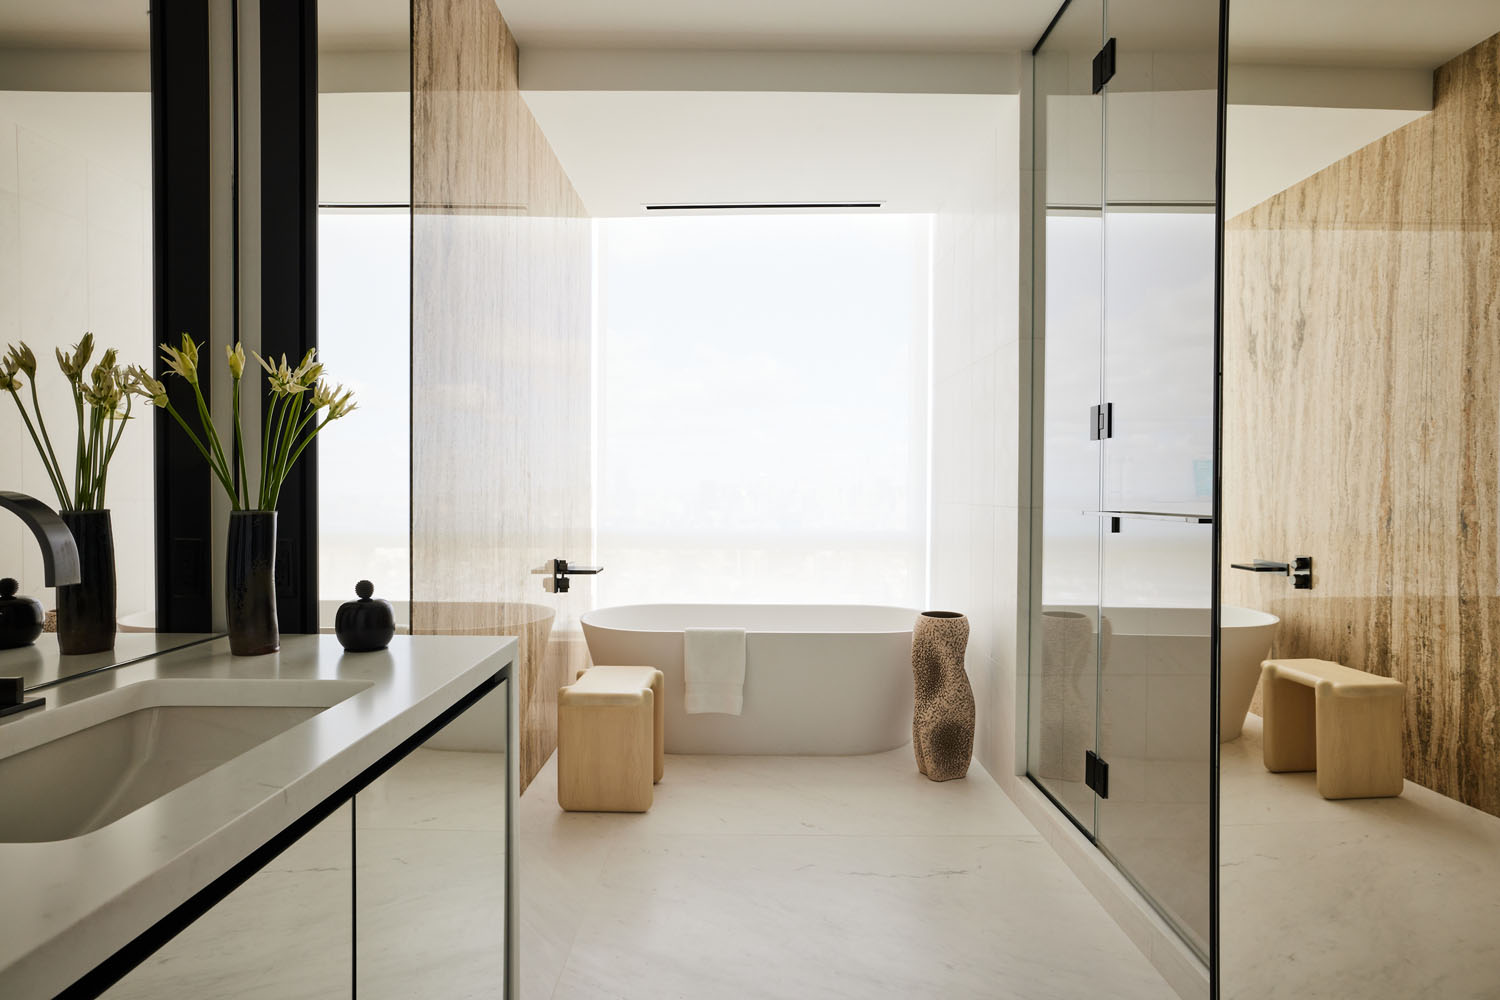 a modern bathroom in neutral tones and curvy style